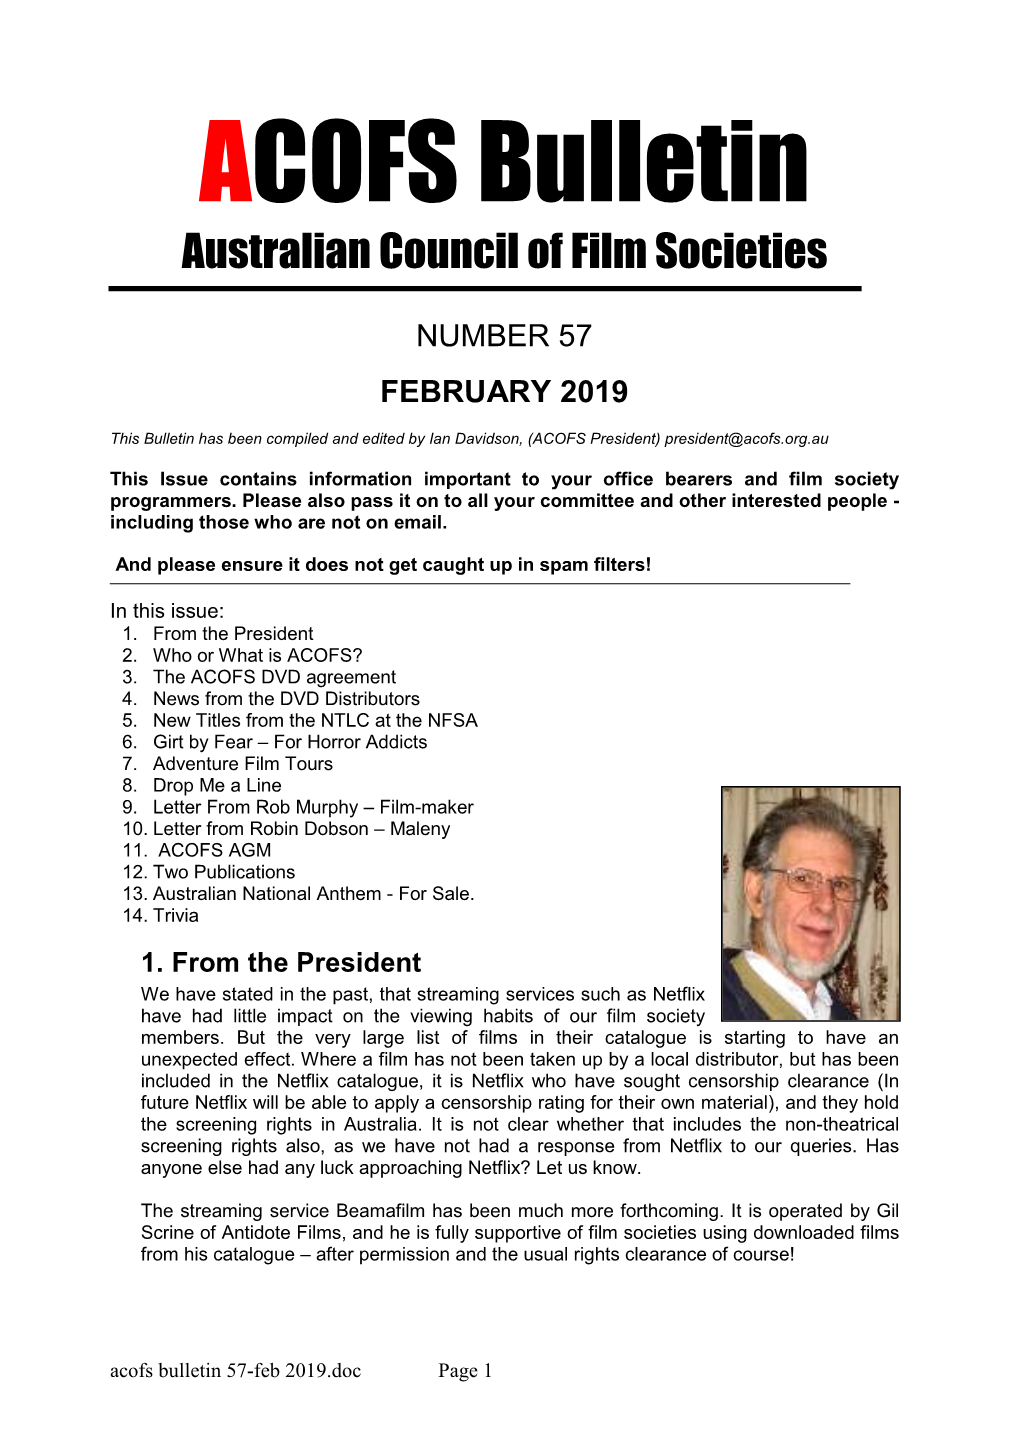 ACOFS Bulletin Australian Council of Film Societies